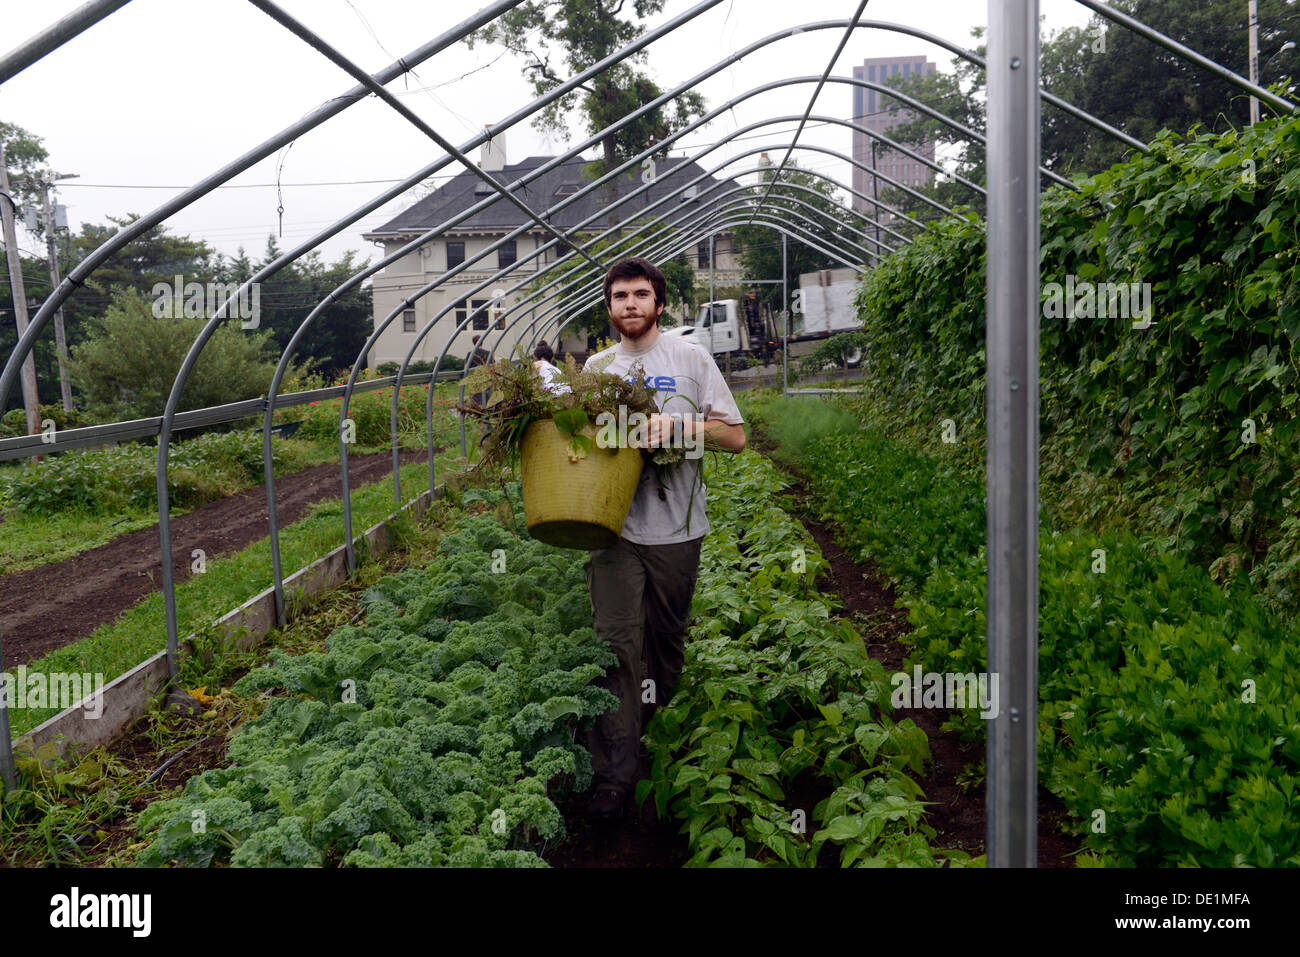 yale university student Jackson Blum, '15, works for the summer at Yale's organic garden. Stock Photo